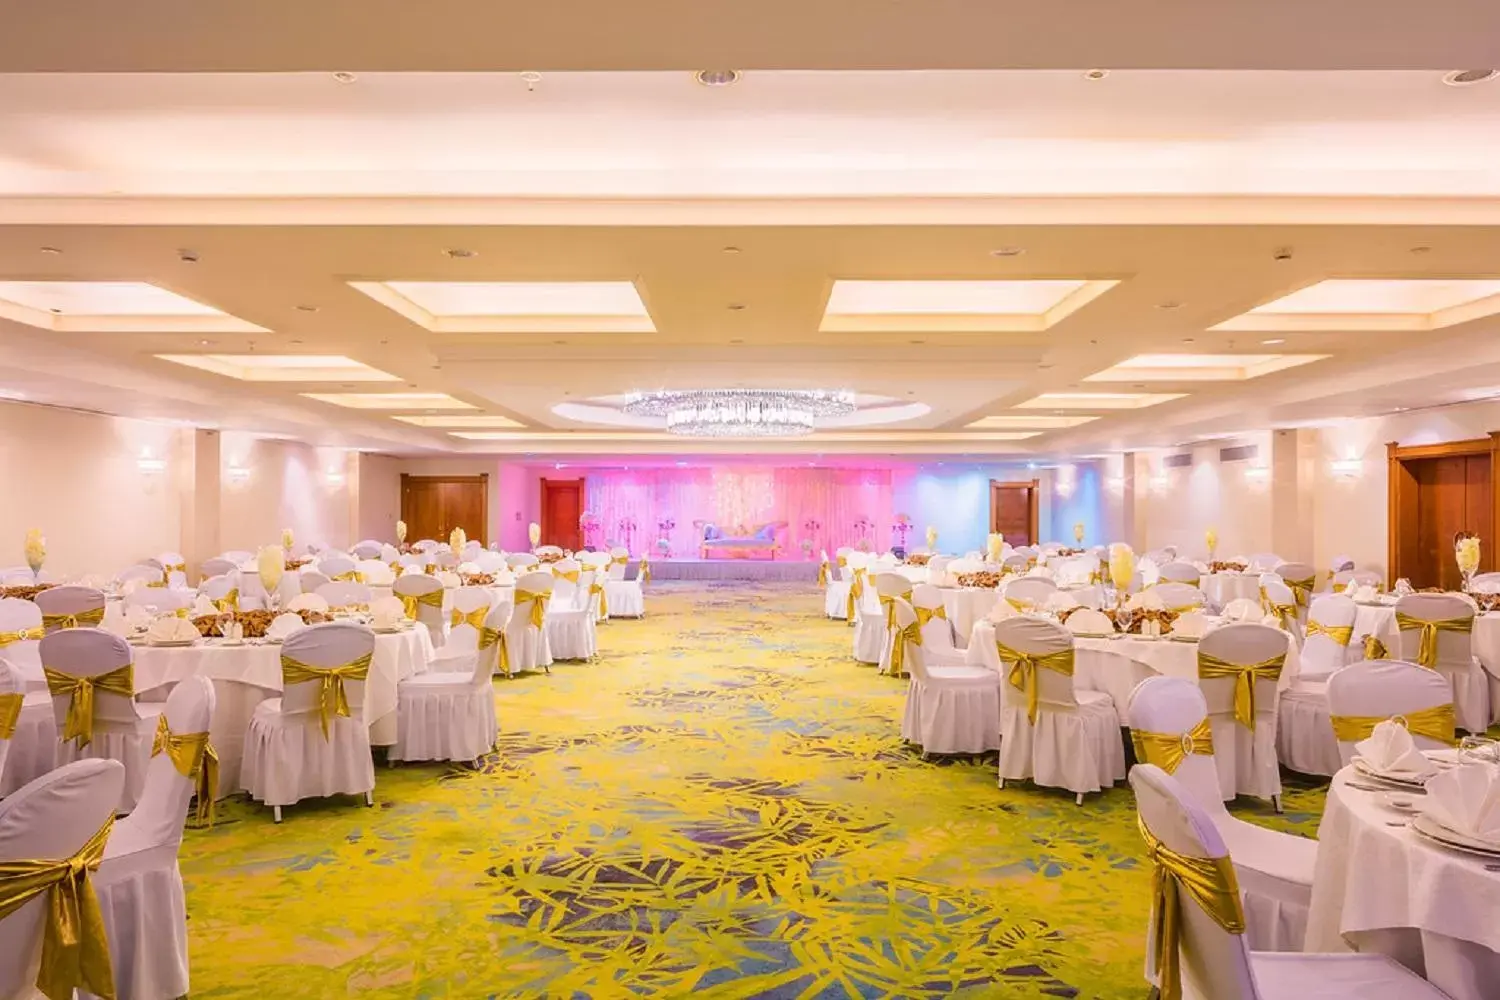 Banquet/Function facilities, Banquet Facilities in Coral Beach Resort Sharjah